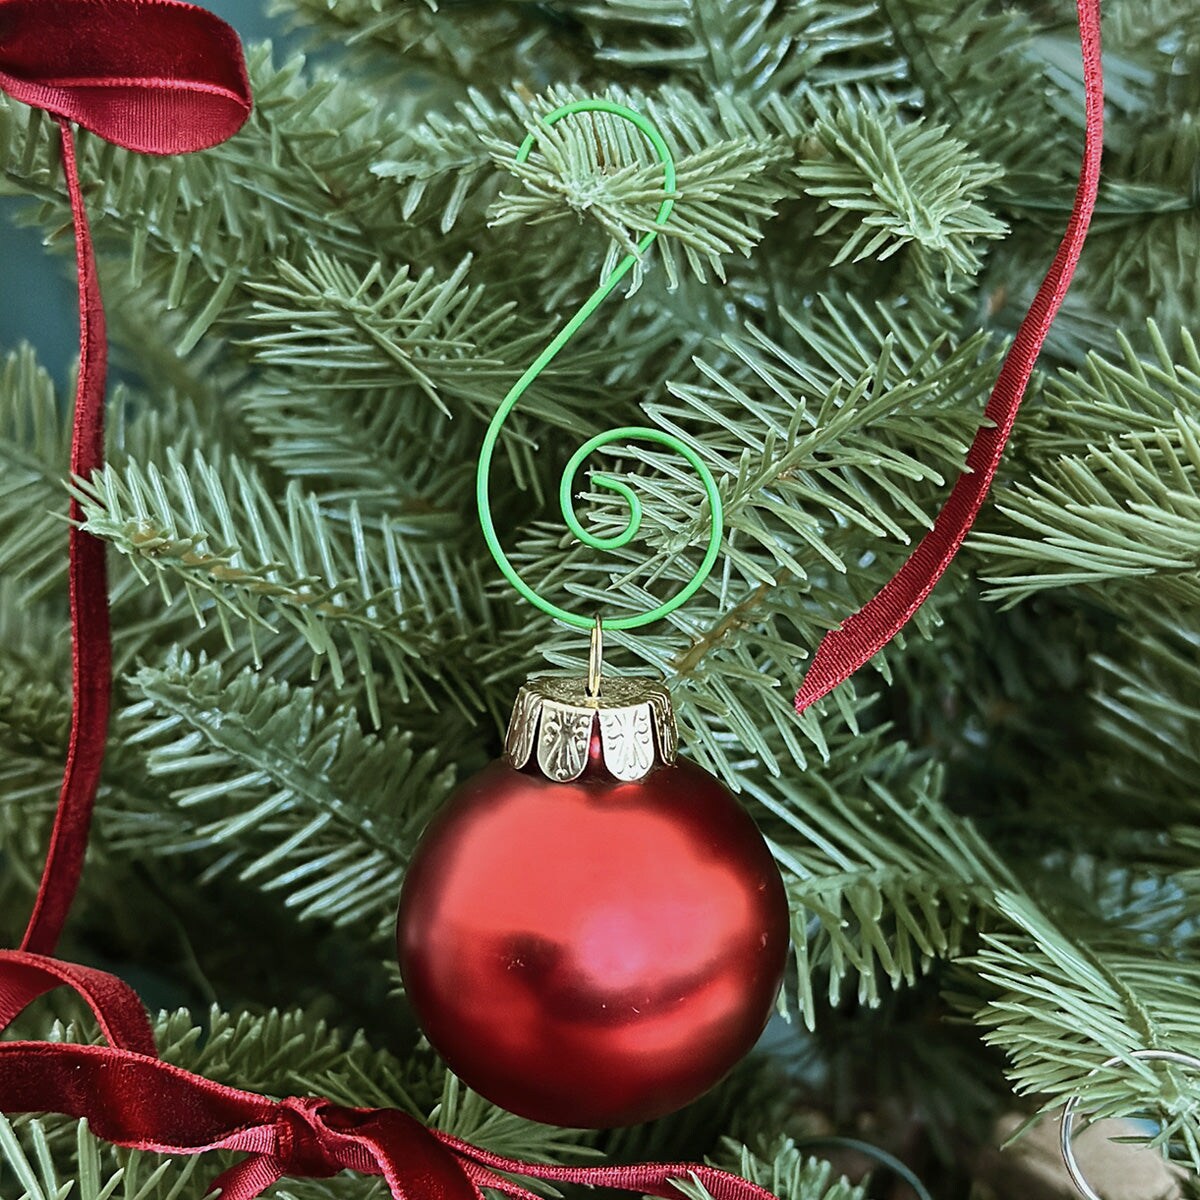 Wrapables Christmas Tree Ornament Hooks, S-Shaped Swirl Hooks